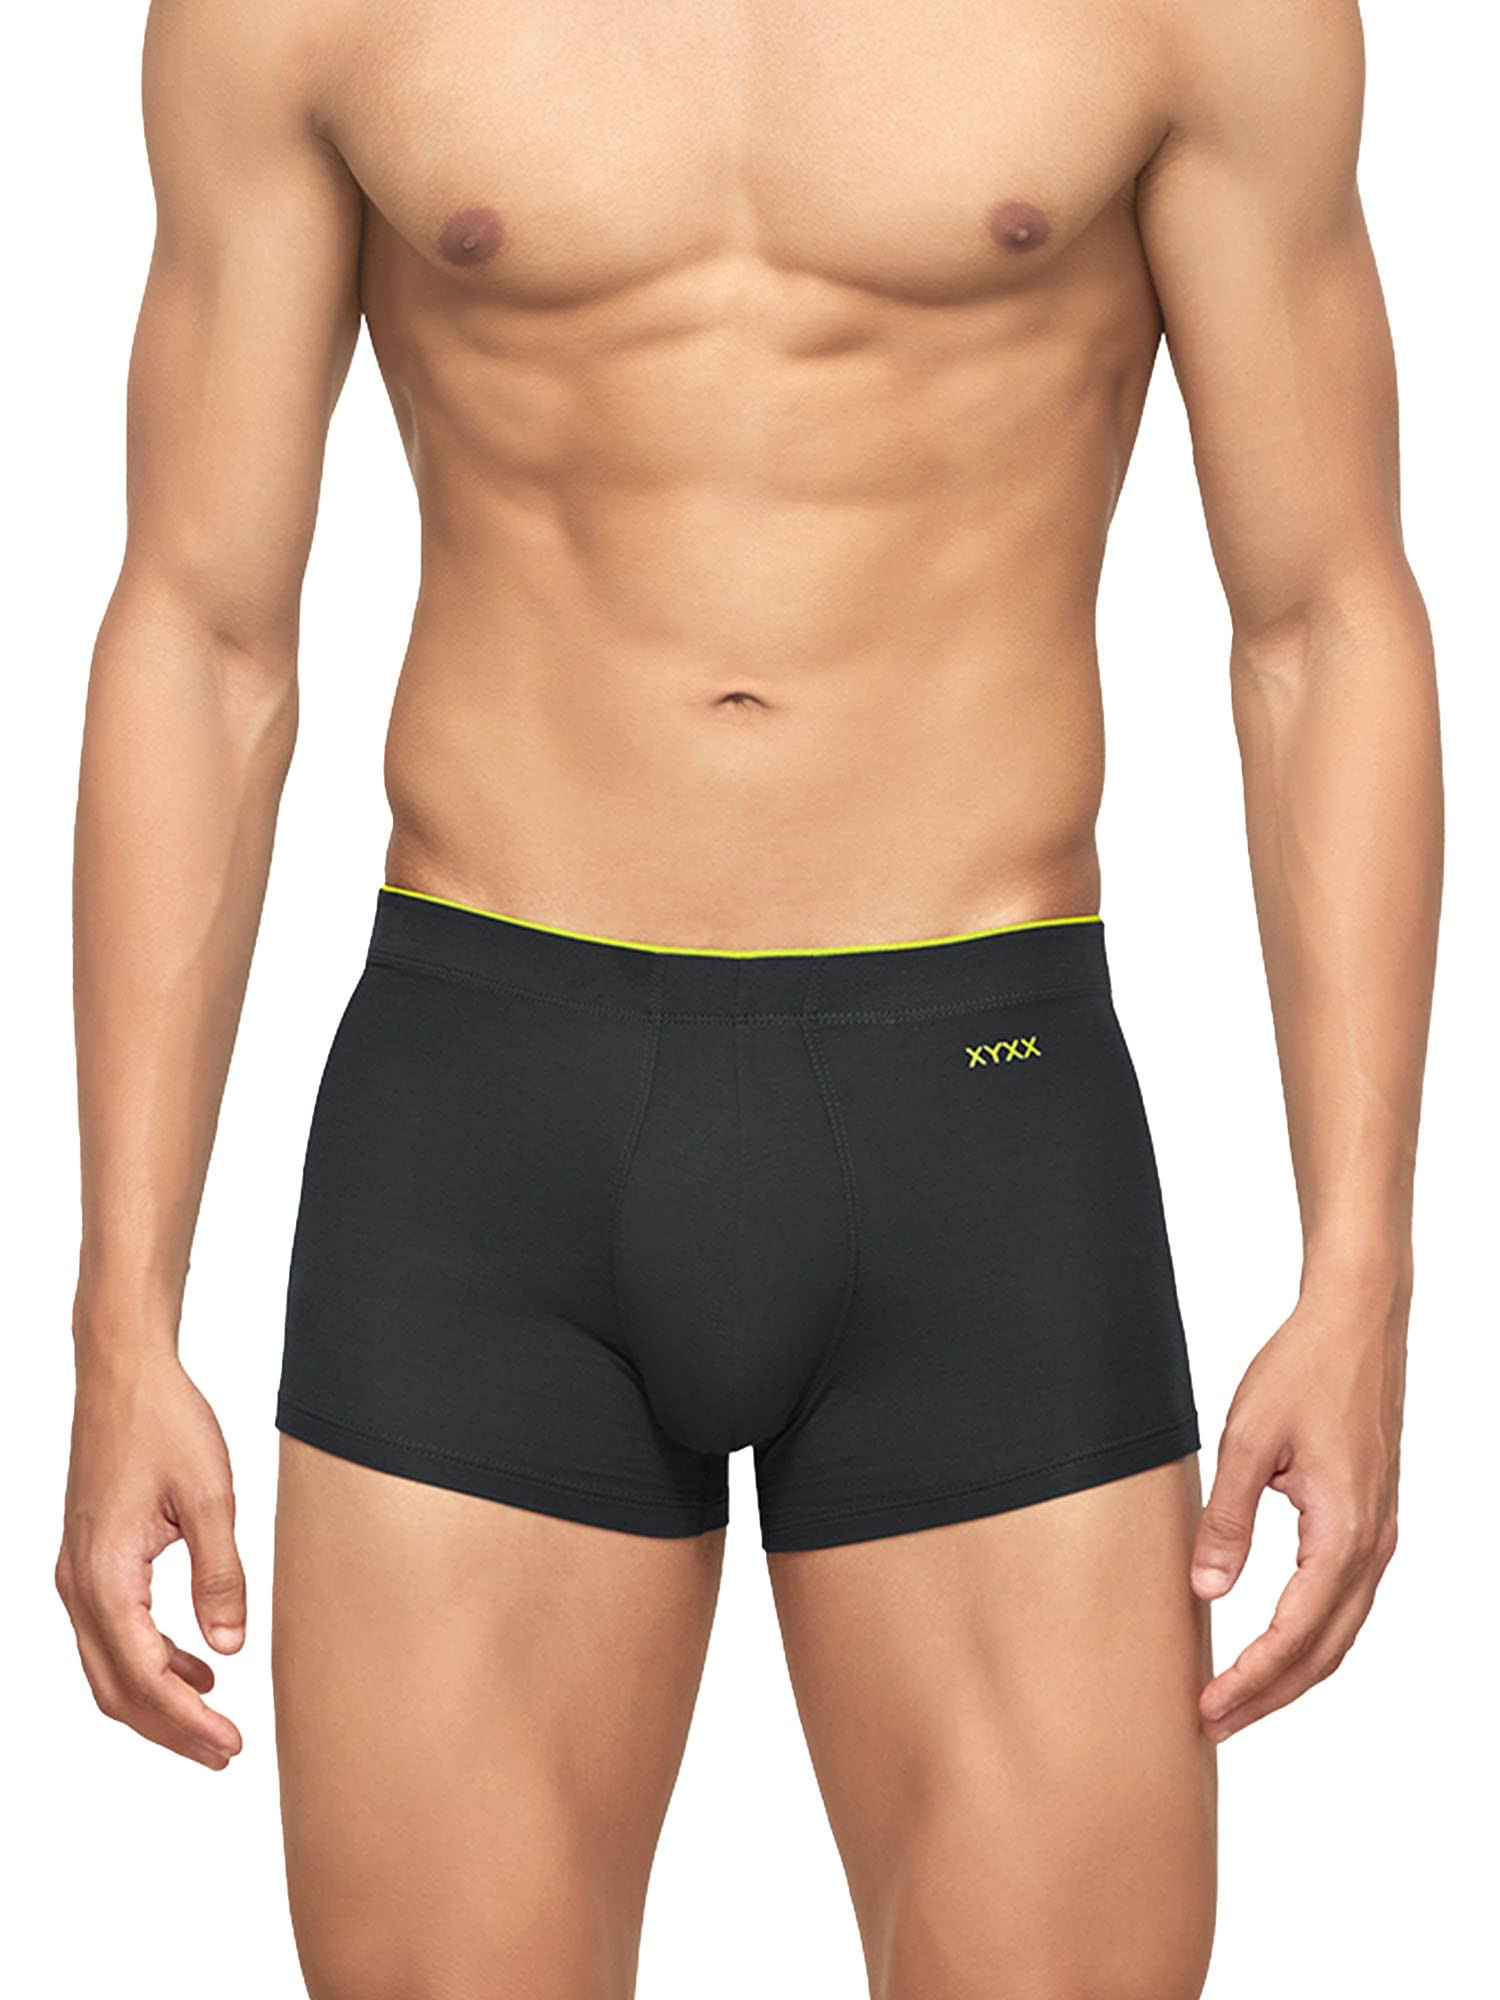 Canny Fit Micro Modal Men's Underwear Briefs